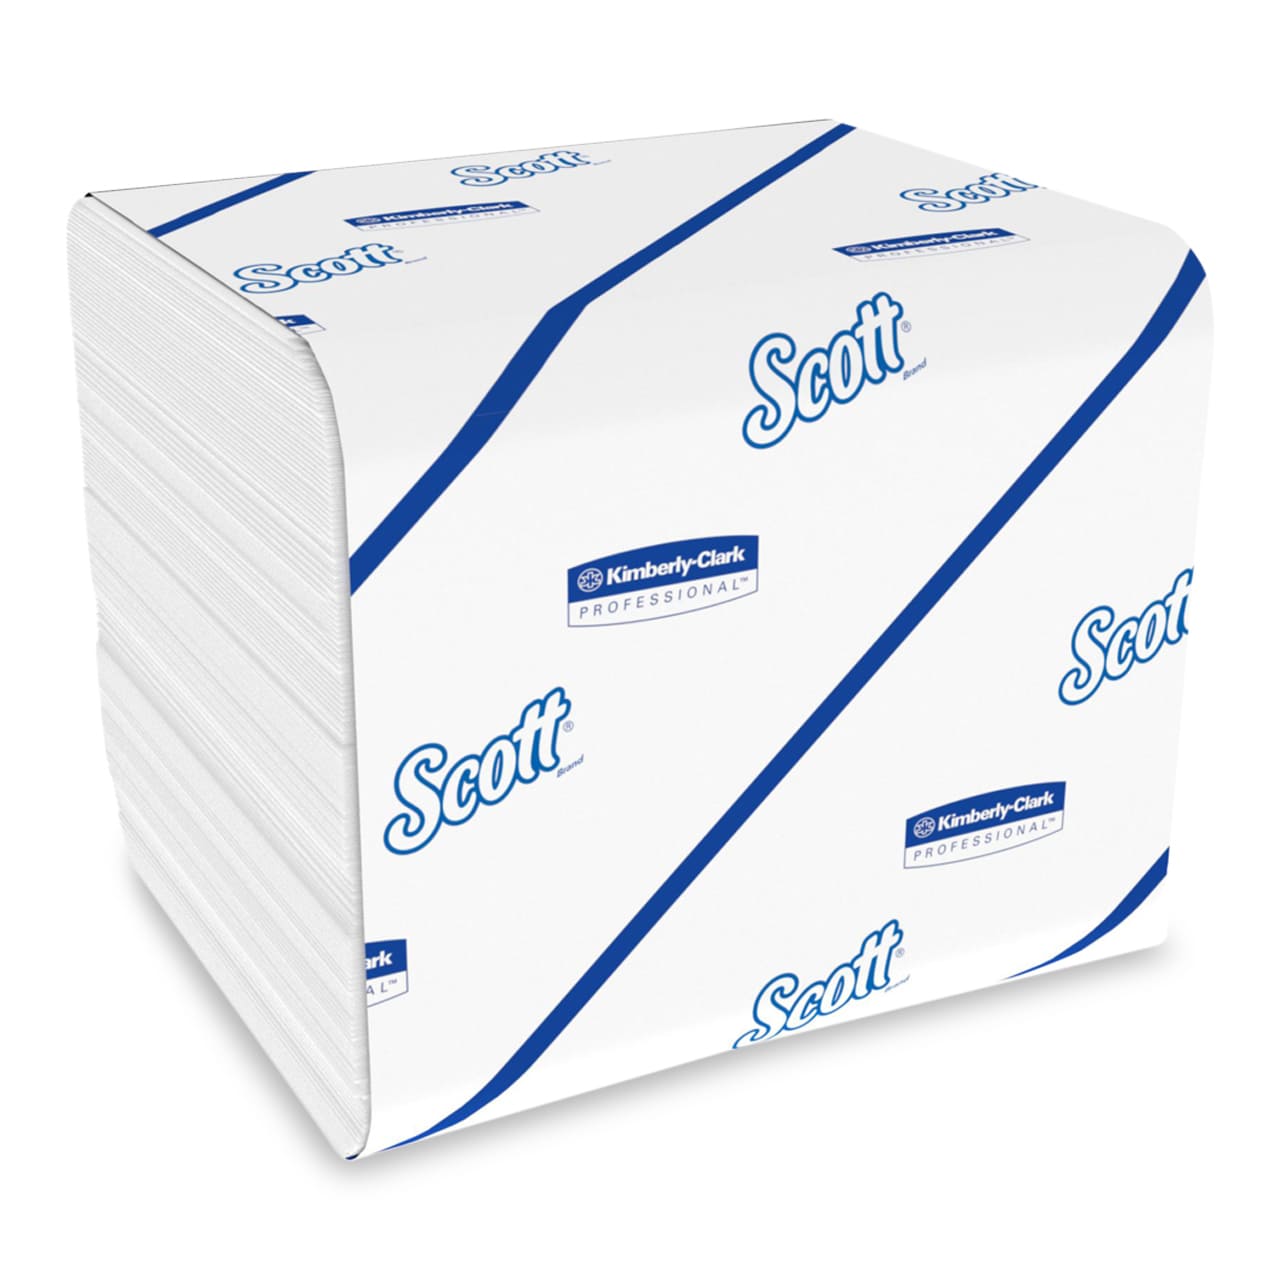 Scott® Control™ WC-Papier - Einzelblattsystem